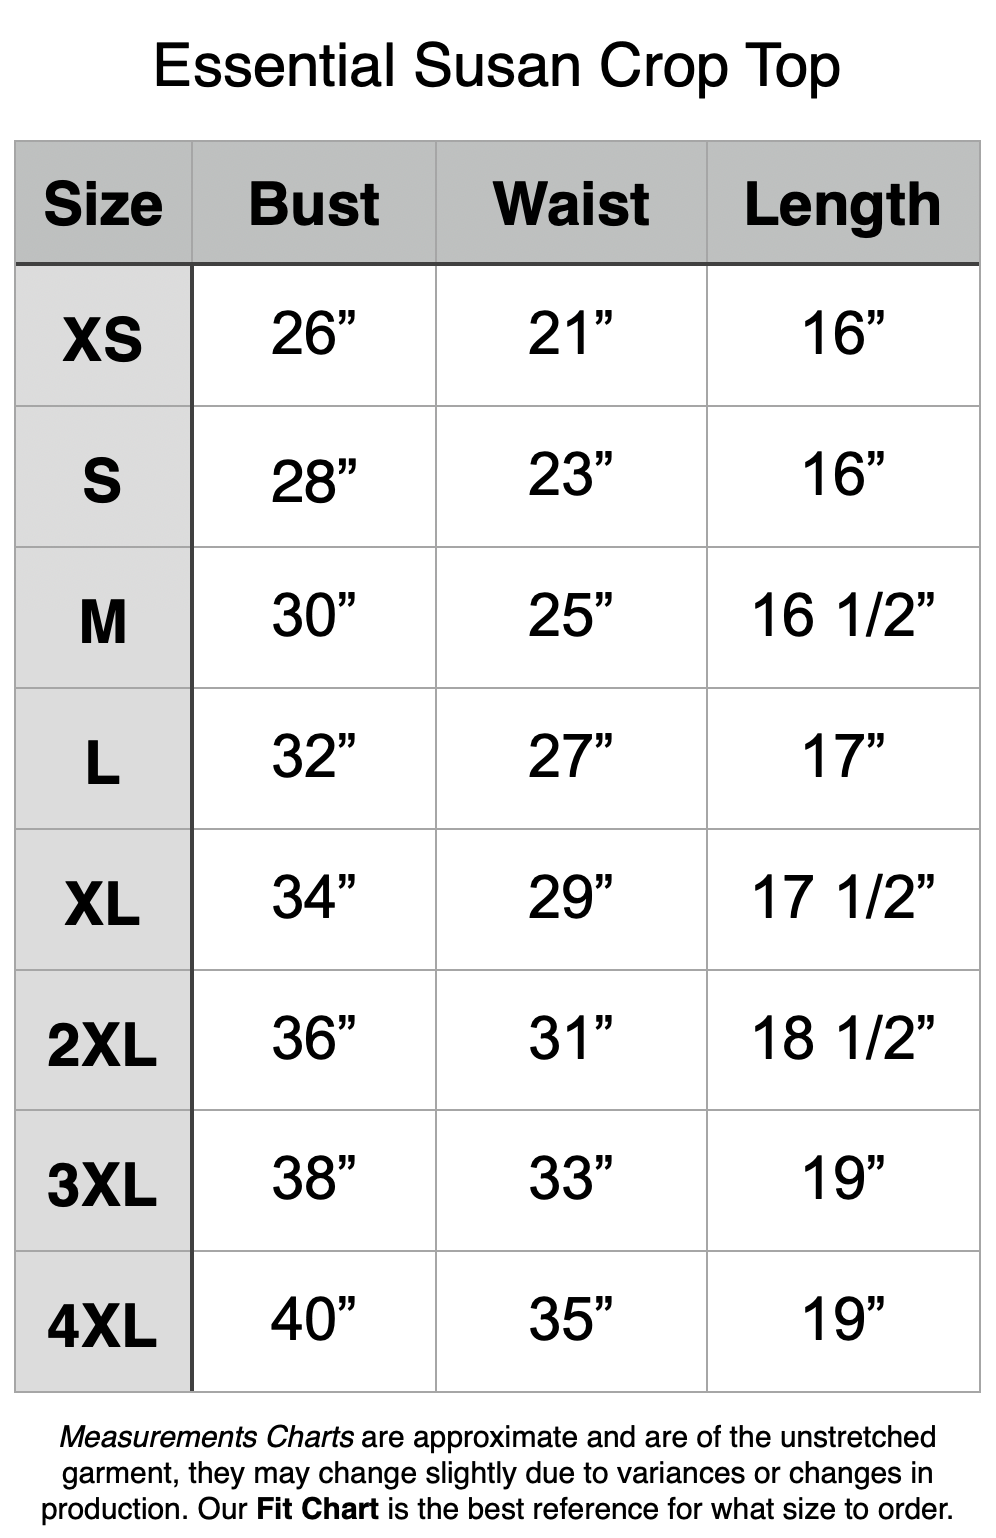 Susan Crop Size Chart - Unstretched Measurements. XS: 26" Bust, 21" Waist. S: 28" b, 23" w. M: 30" b, 25" w. L: 32" b, 27" w. XL: 34" b, 29" w. 2XL: 36" b, 31" w. 3XL: 38" b, 33" w. 4XL: 40" b, 35" w.